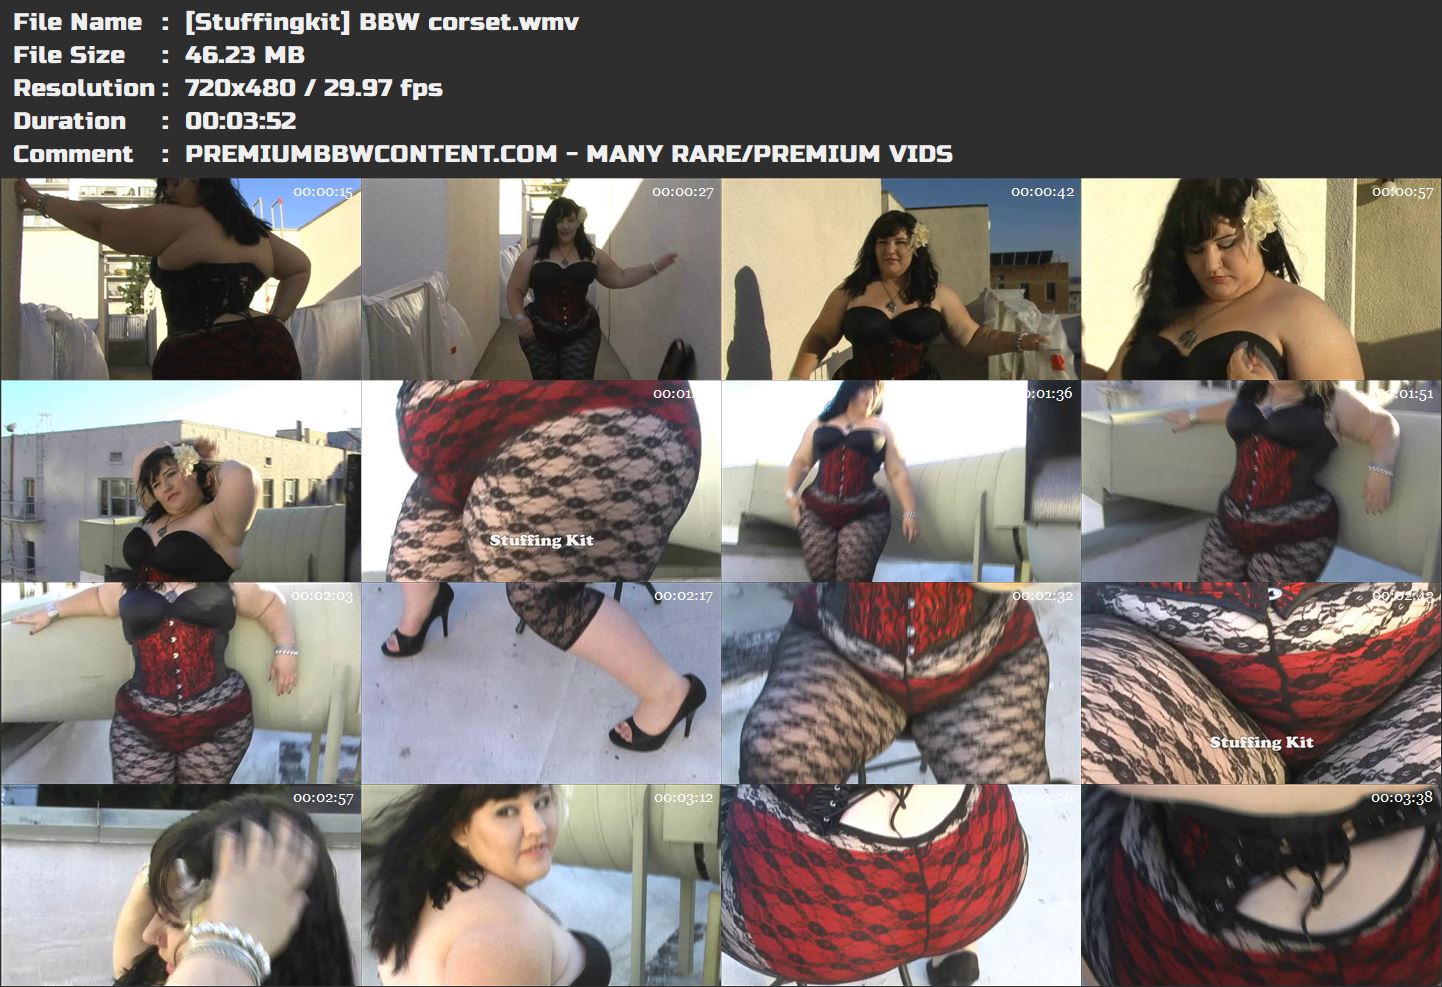 [Stuffingkit] BBW corset thumbnails